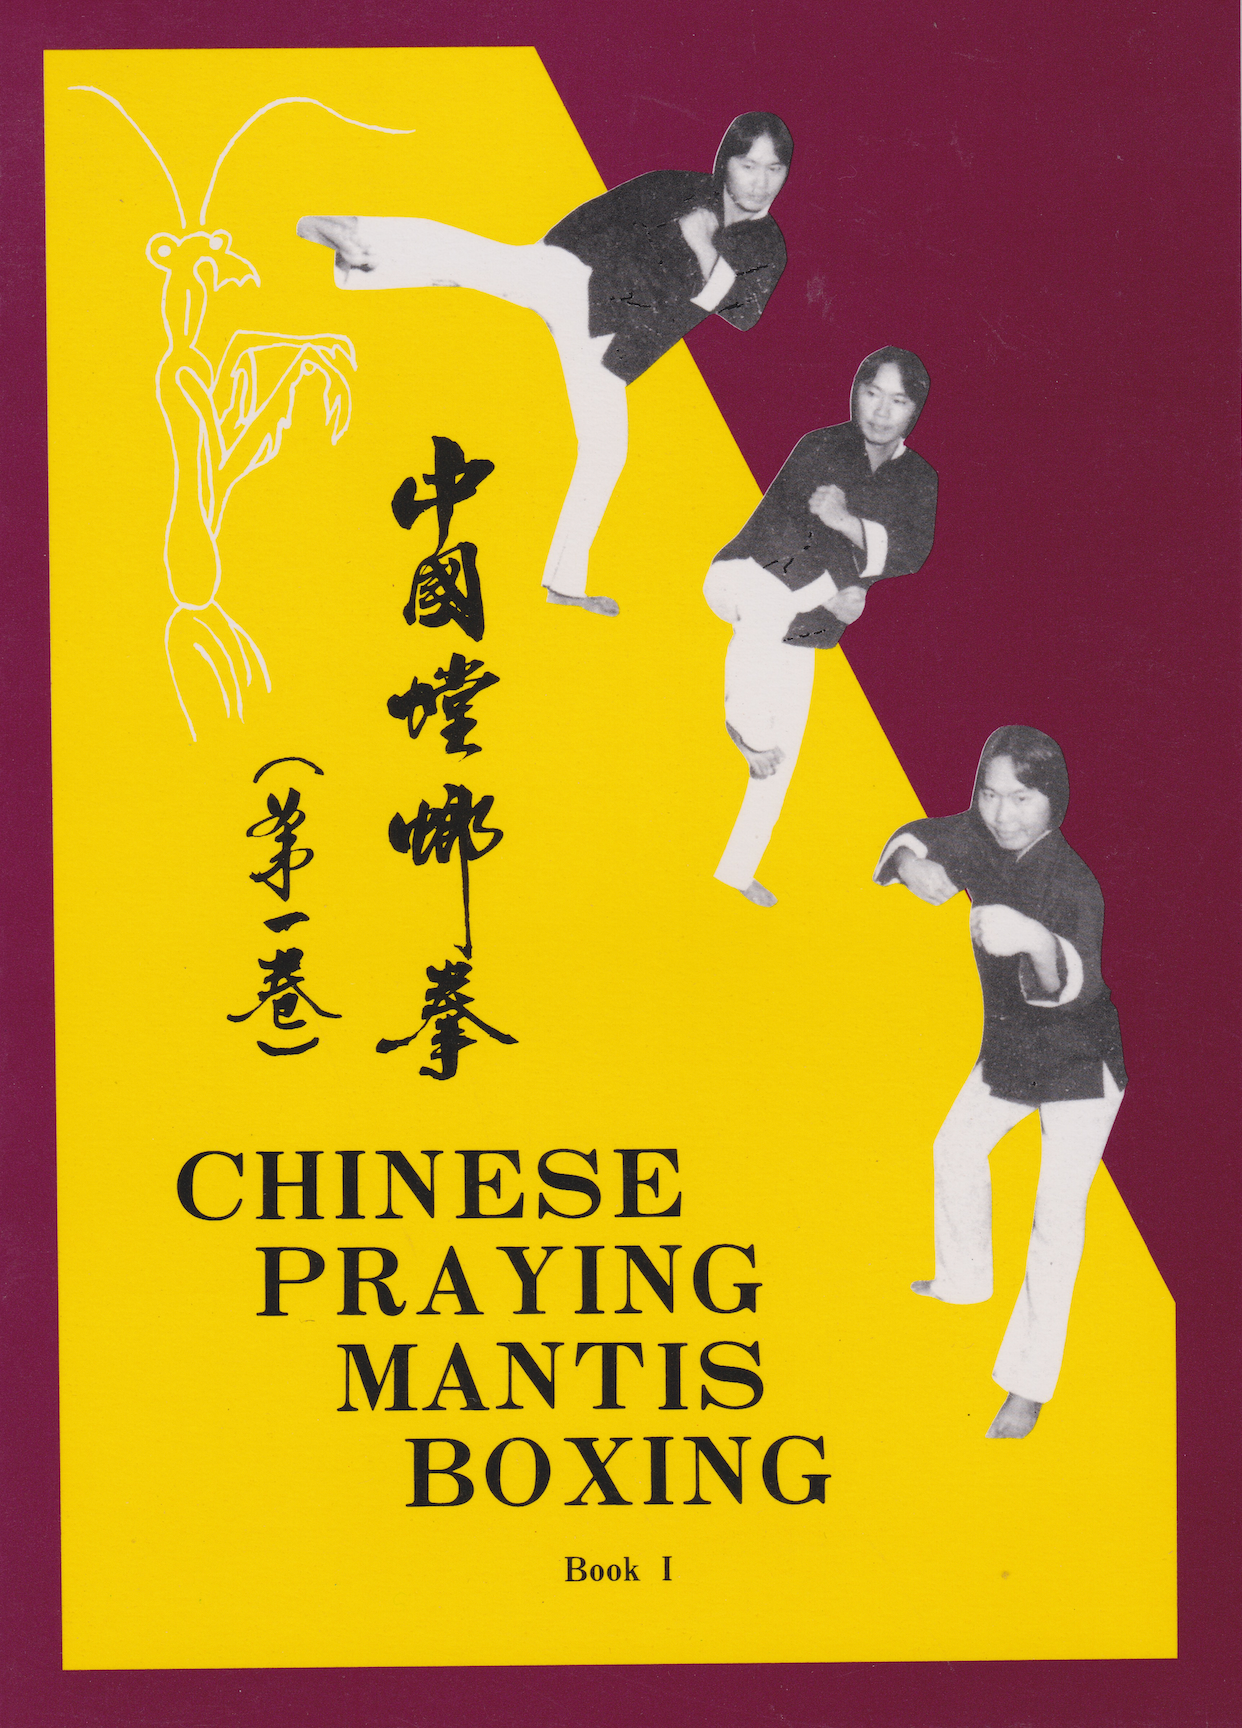 Mantis religiosa china Boxeo Libro I por HC Chao